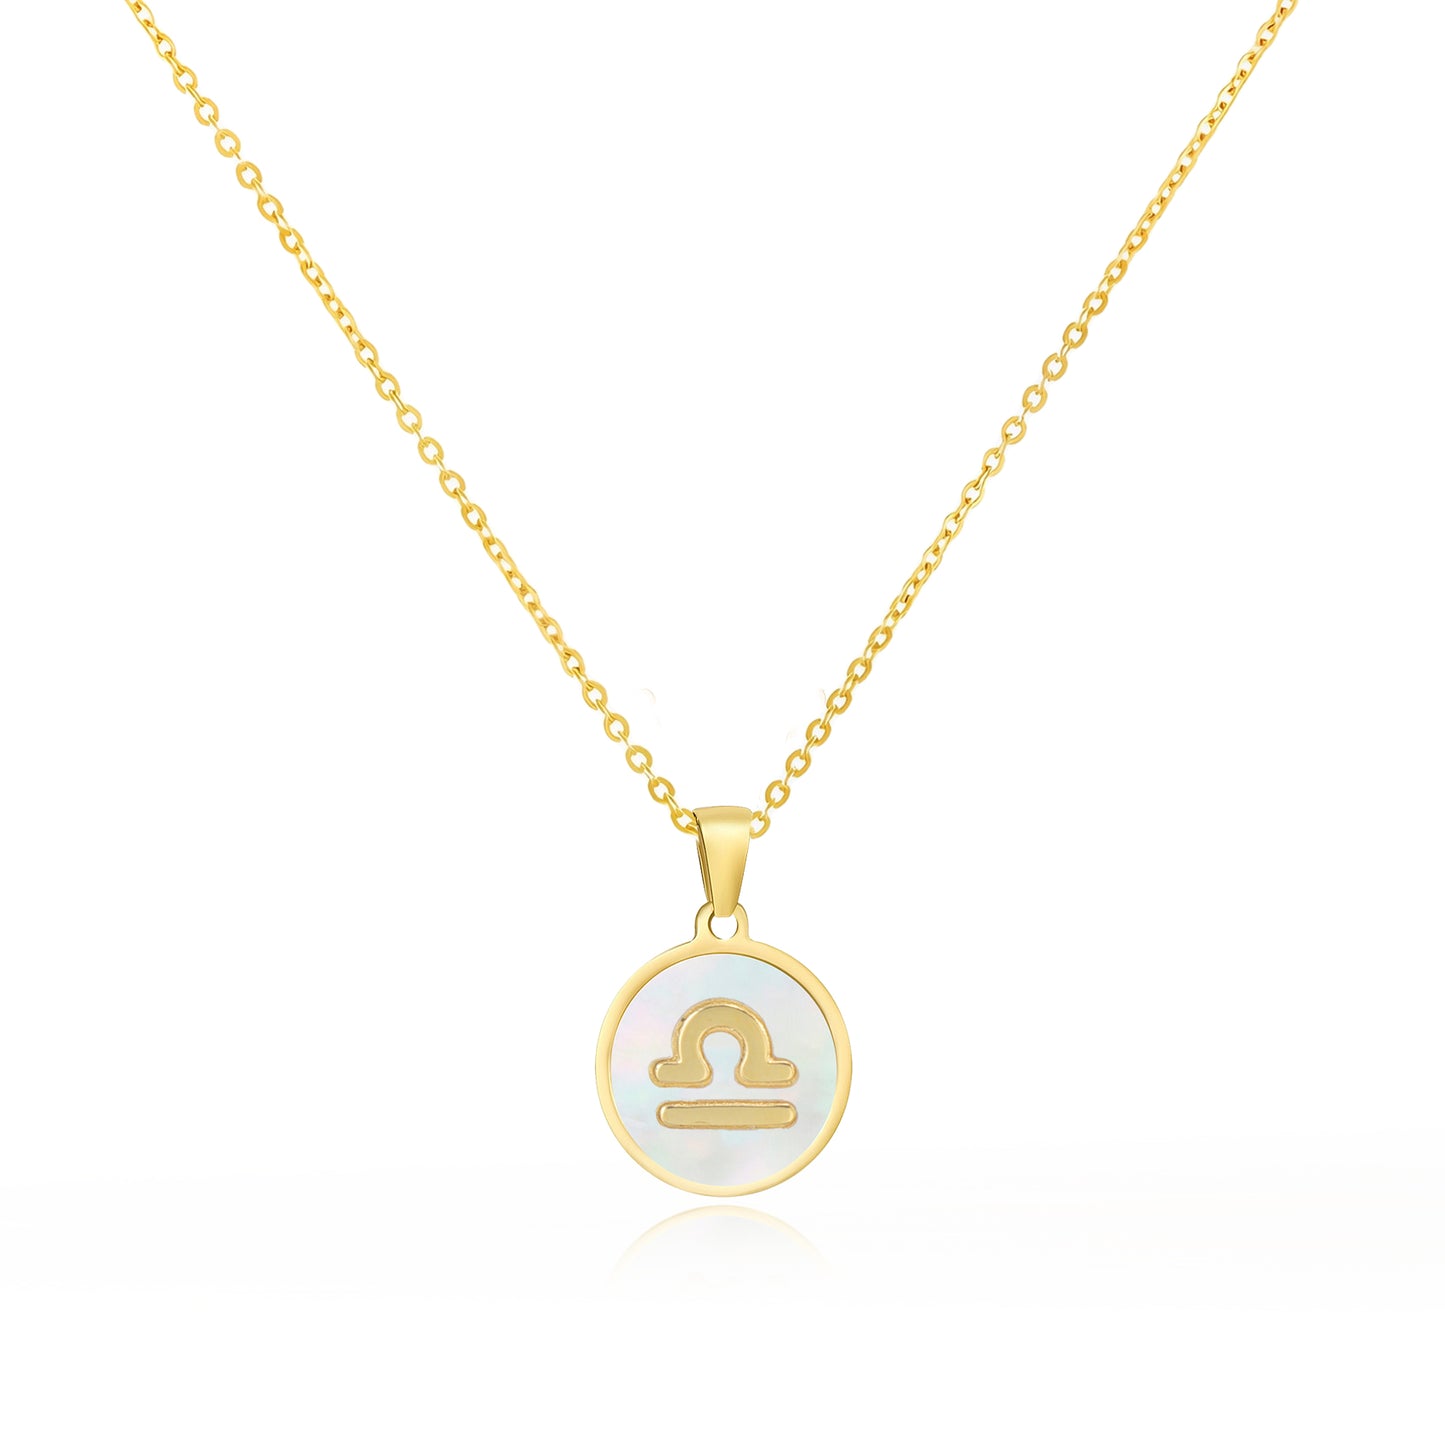 14K Gold Plated 12 Zodiac Golden Necklace